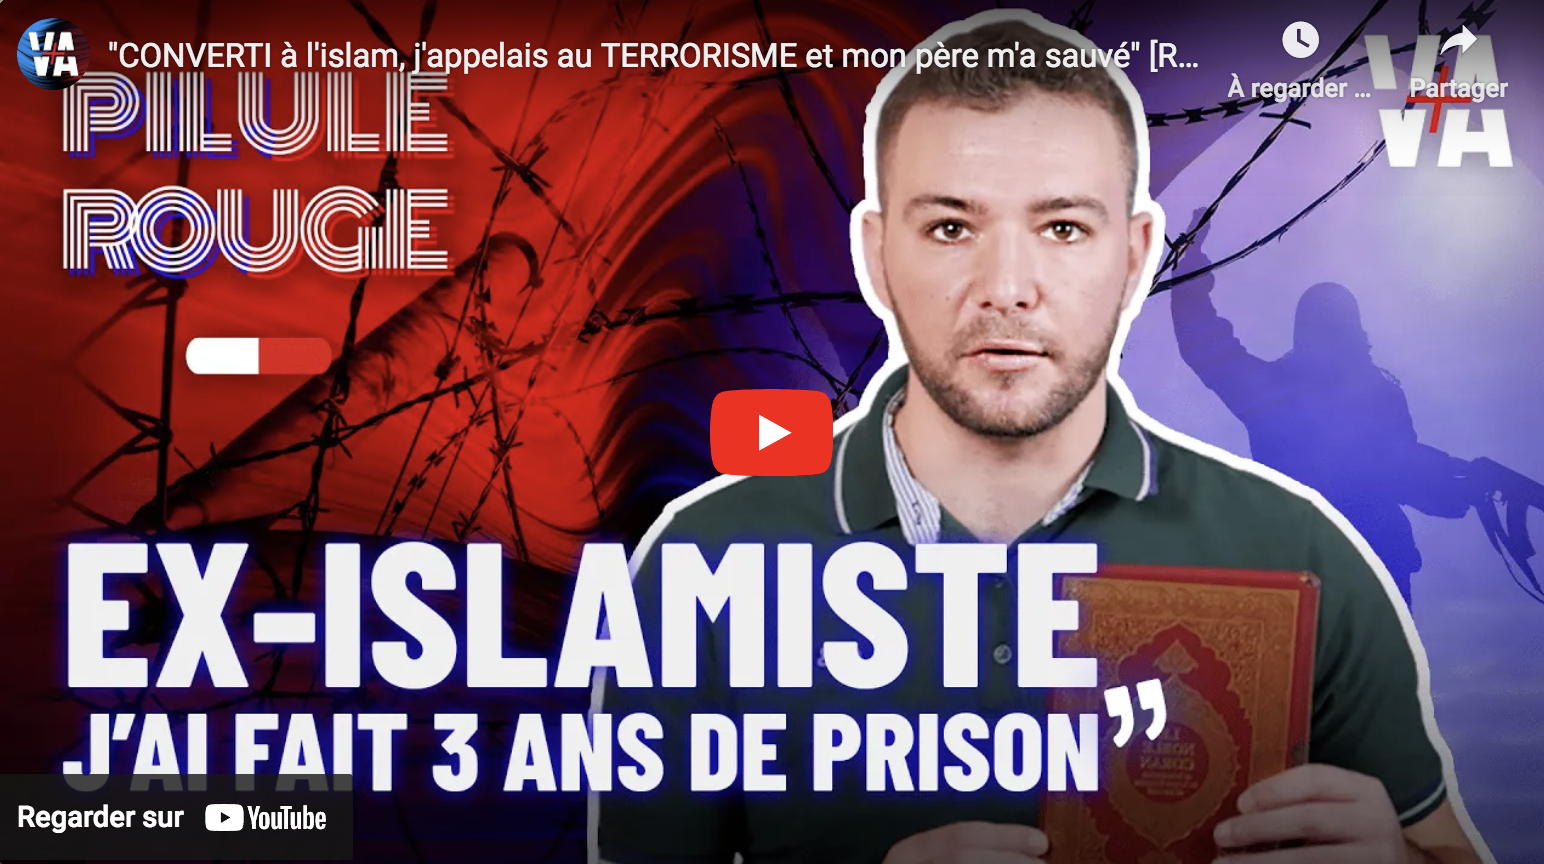 Témoignage : “J’étais islamiste, je suis devenu patriote français” (VIDÉO)